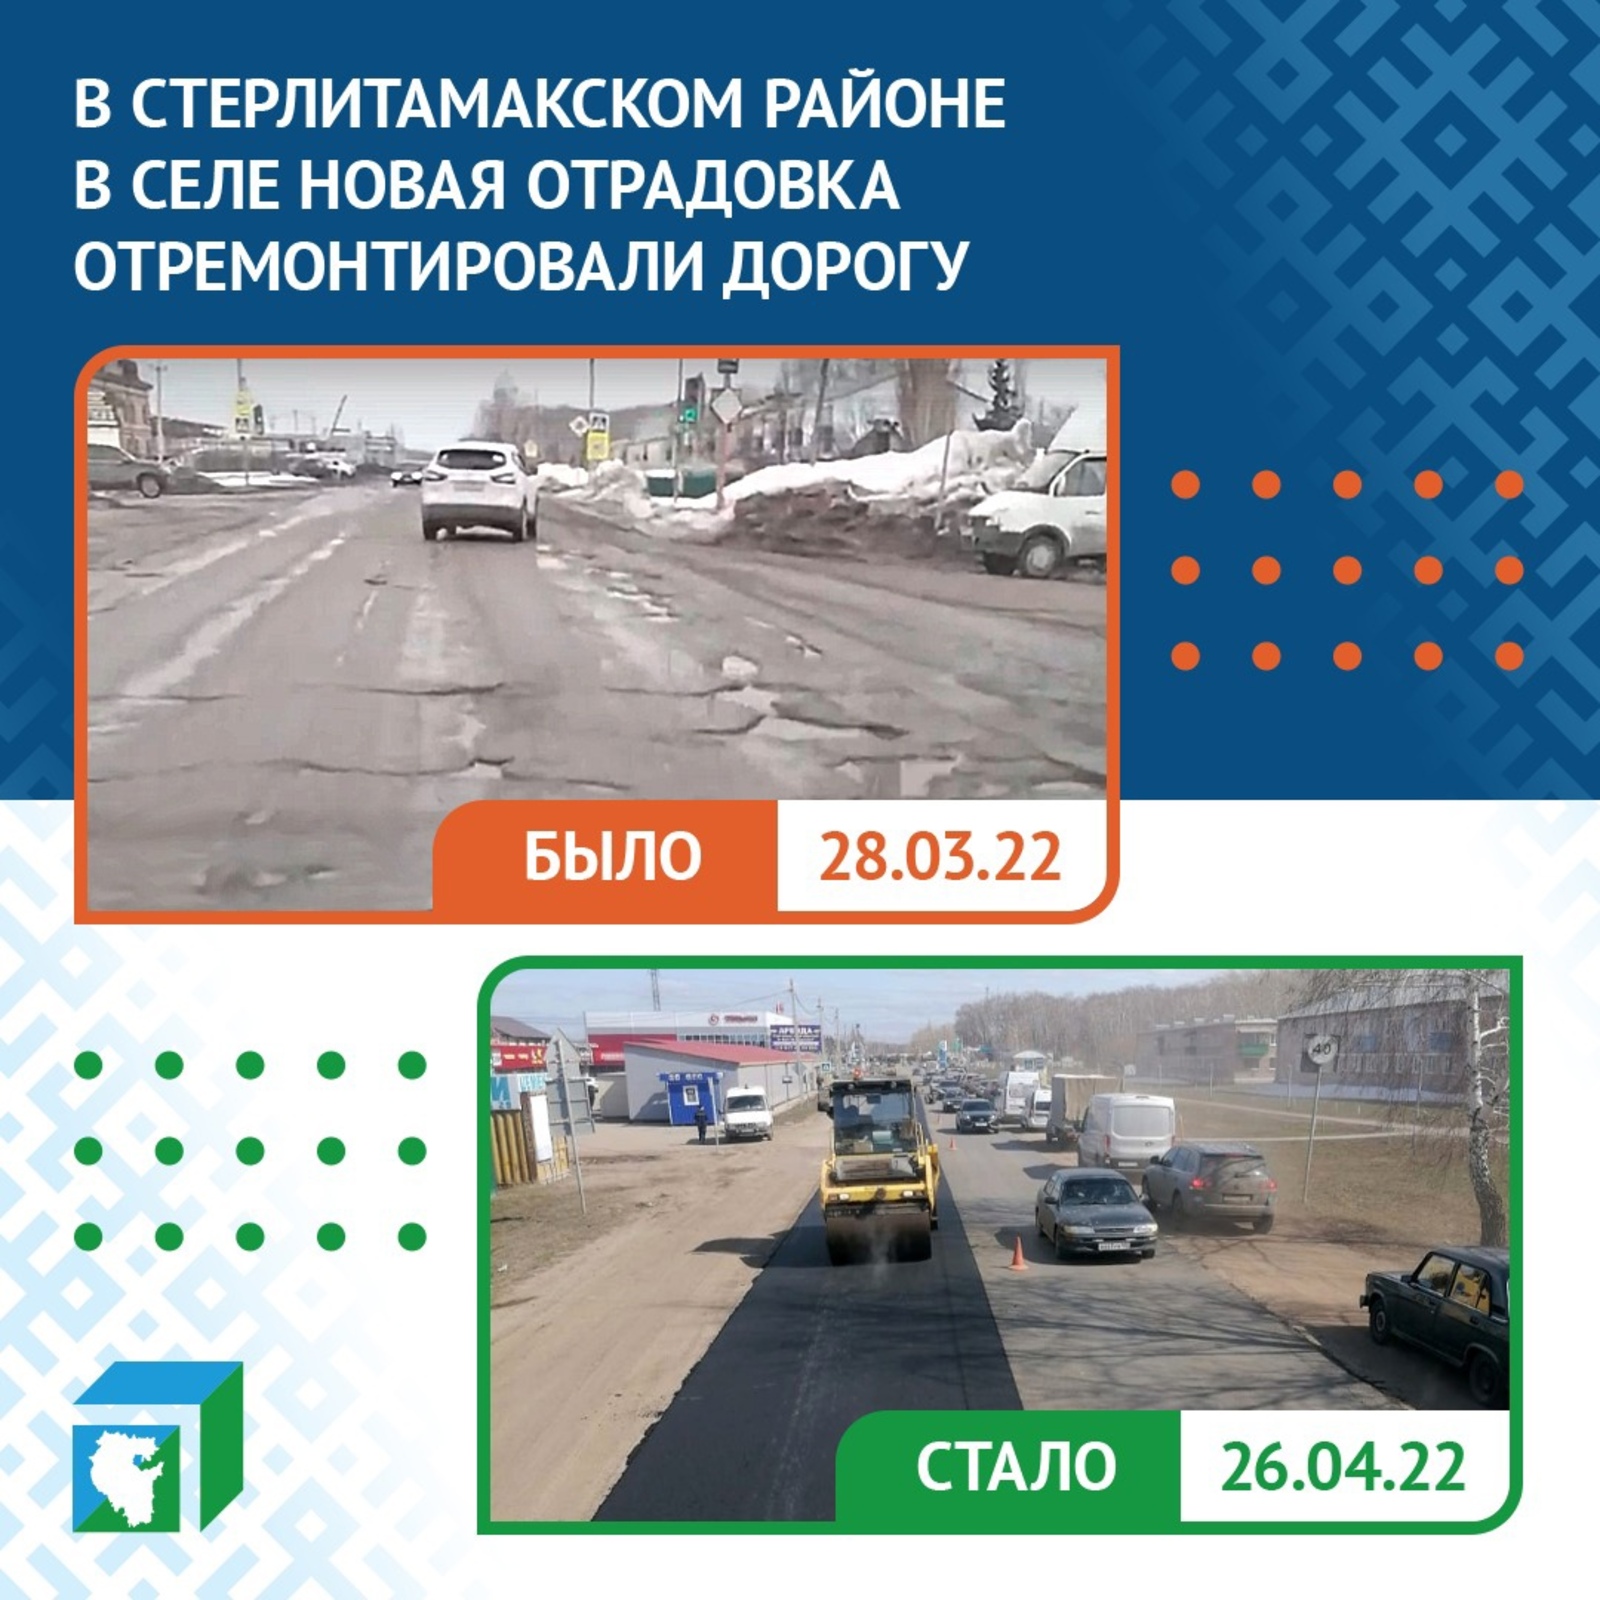 Благодаря ЦУР в Башкирии отремонтировали автодорогу